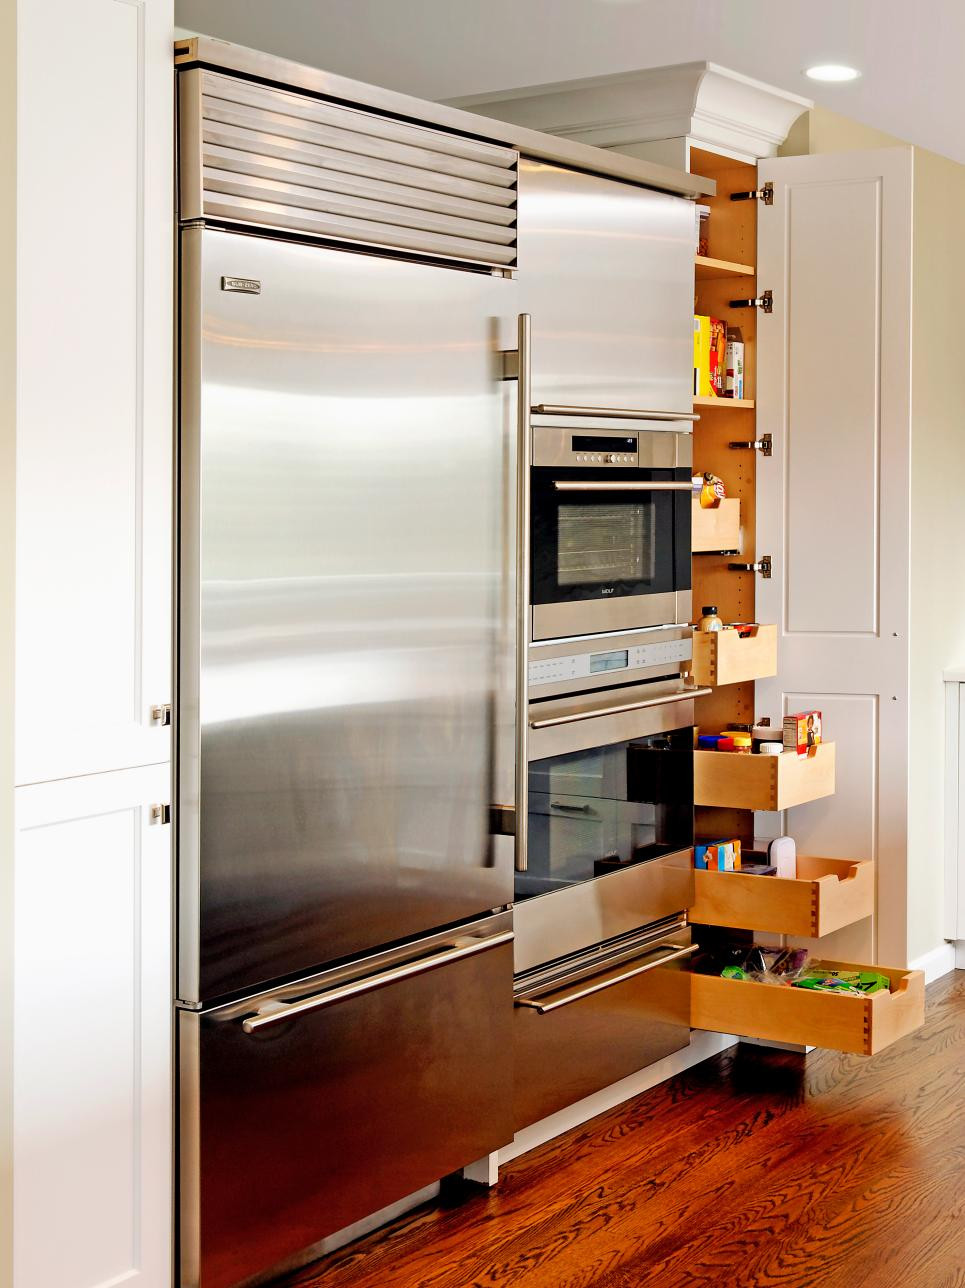 Storage Cabinet For The Kitchen
 Kitchen Design Ideas for Creative Storage Solutions